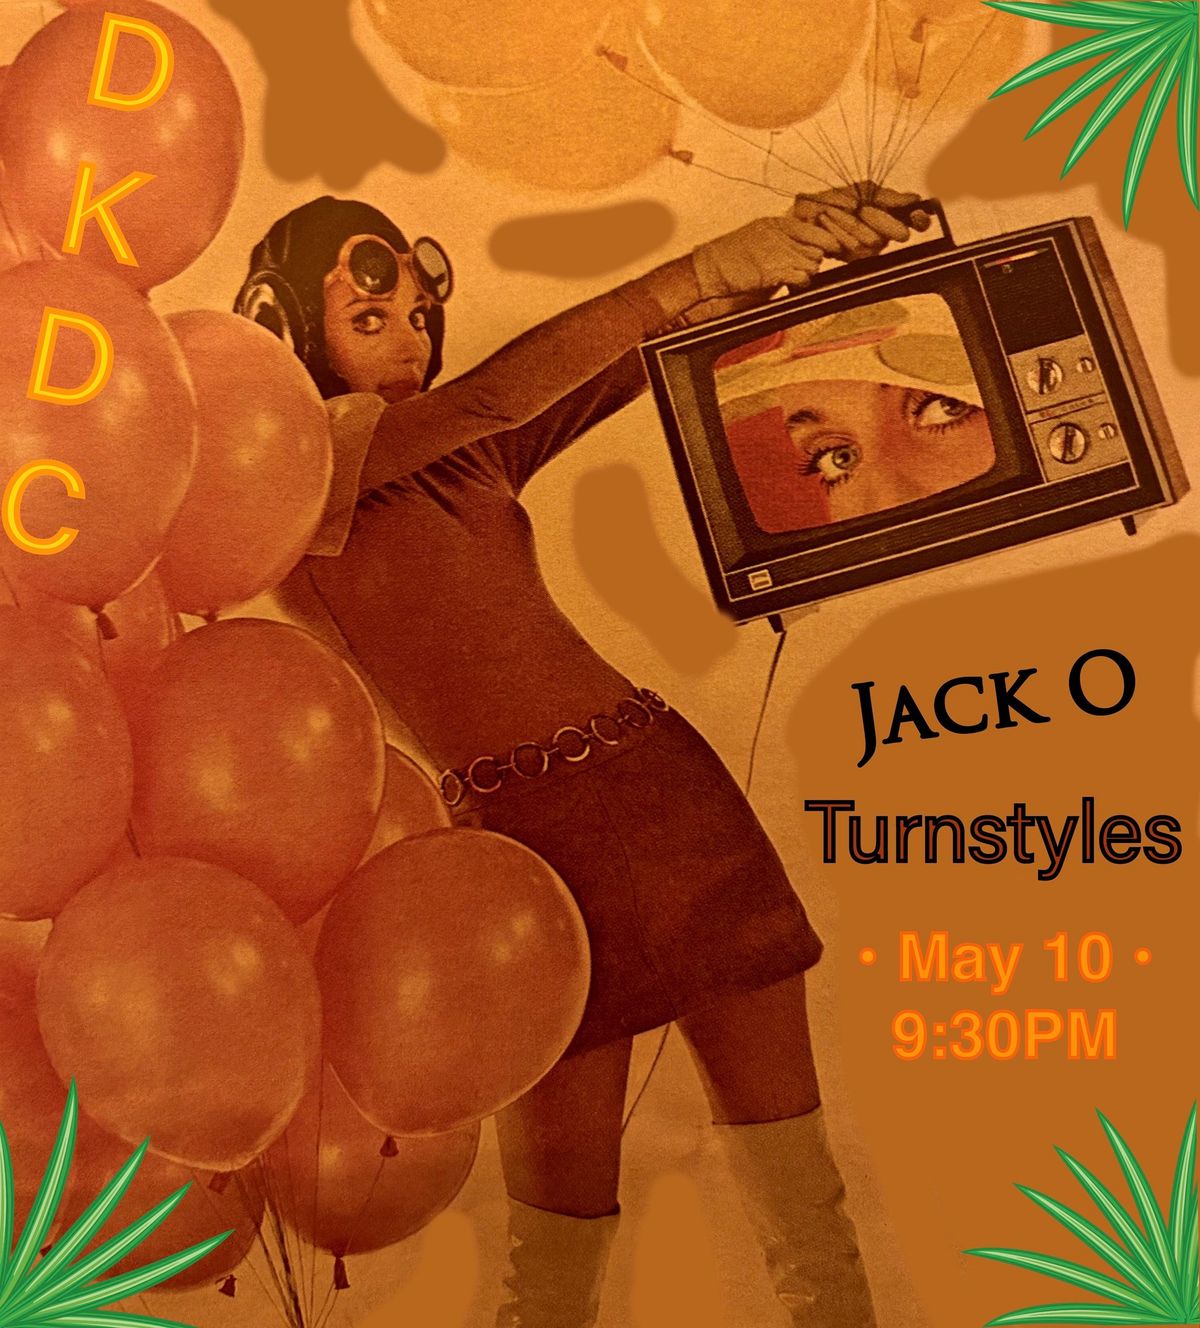 Jack O + Turnstyles at DKDC